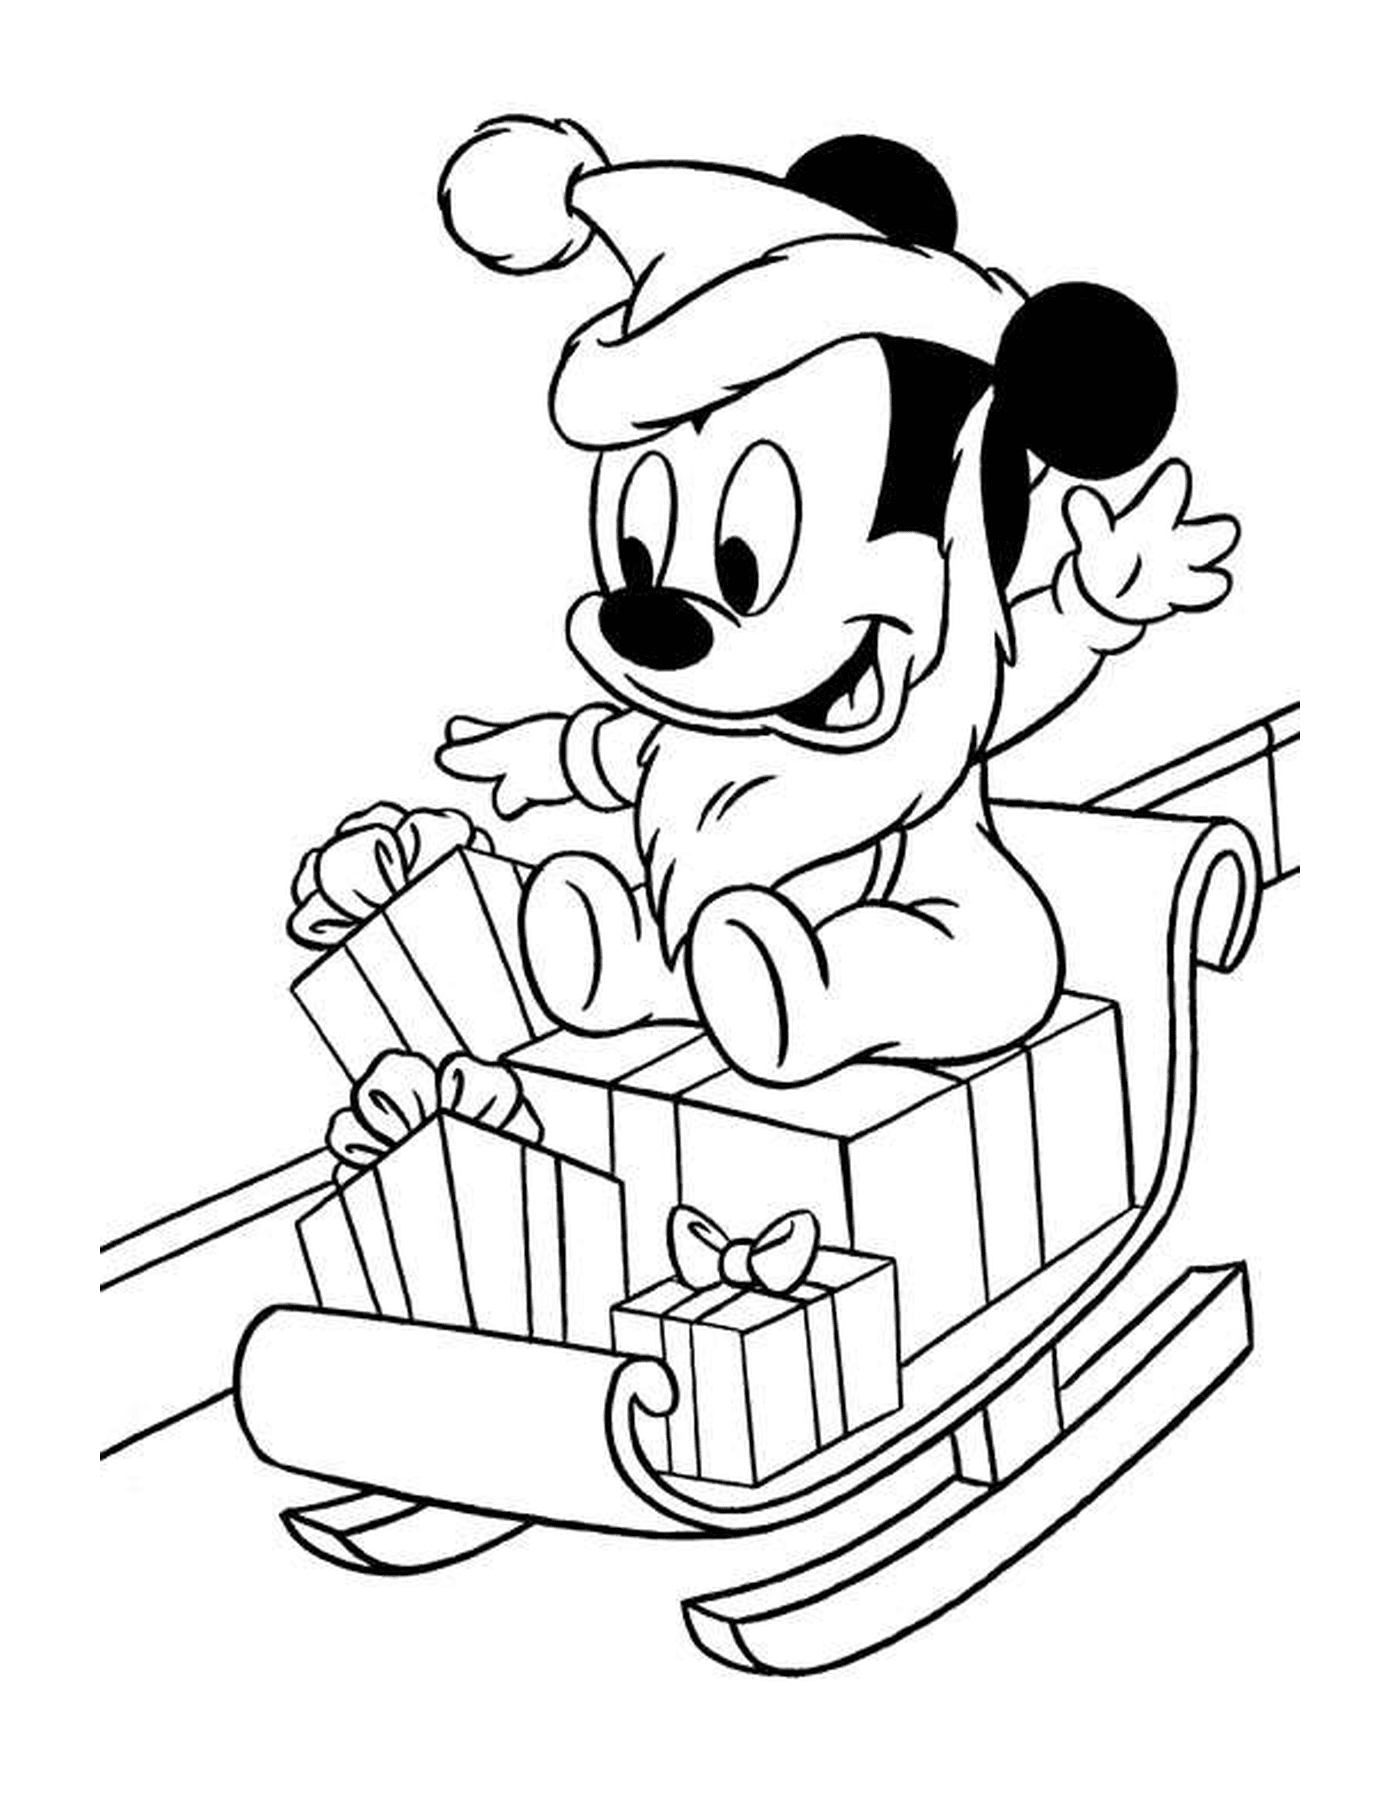  Mickey sitting on sledge 